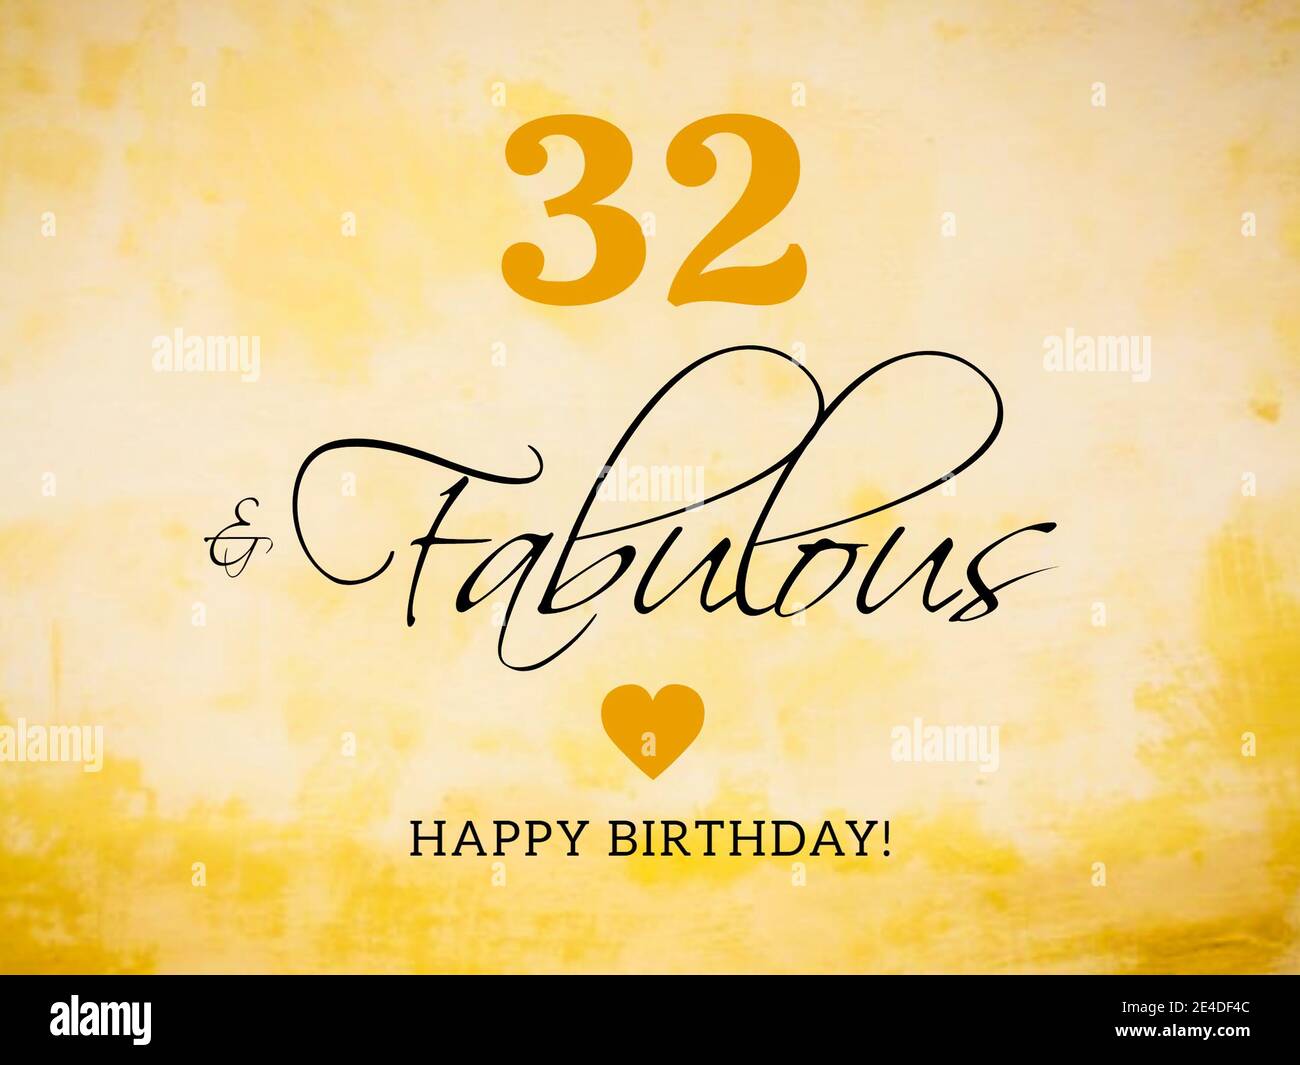 32nd birthday card wishes illustration Stock Photo